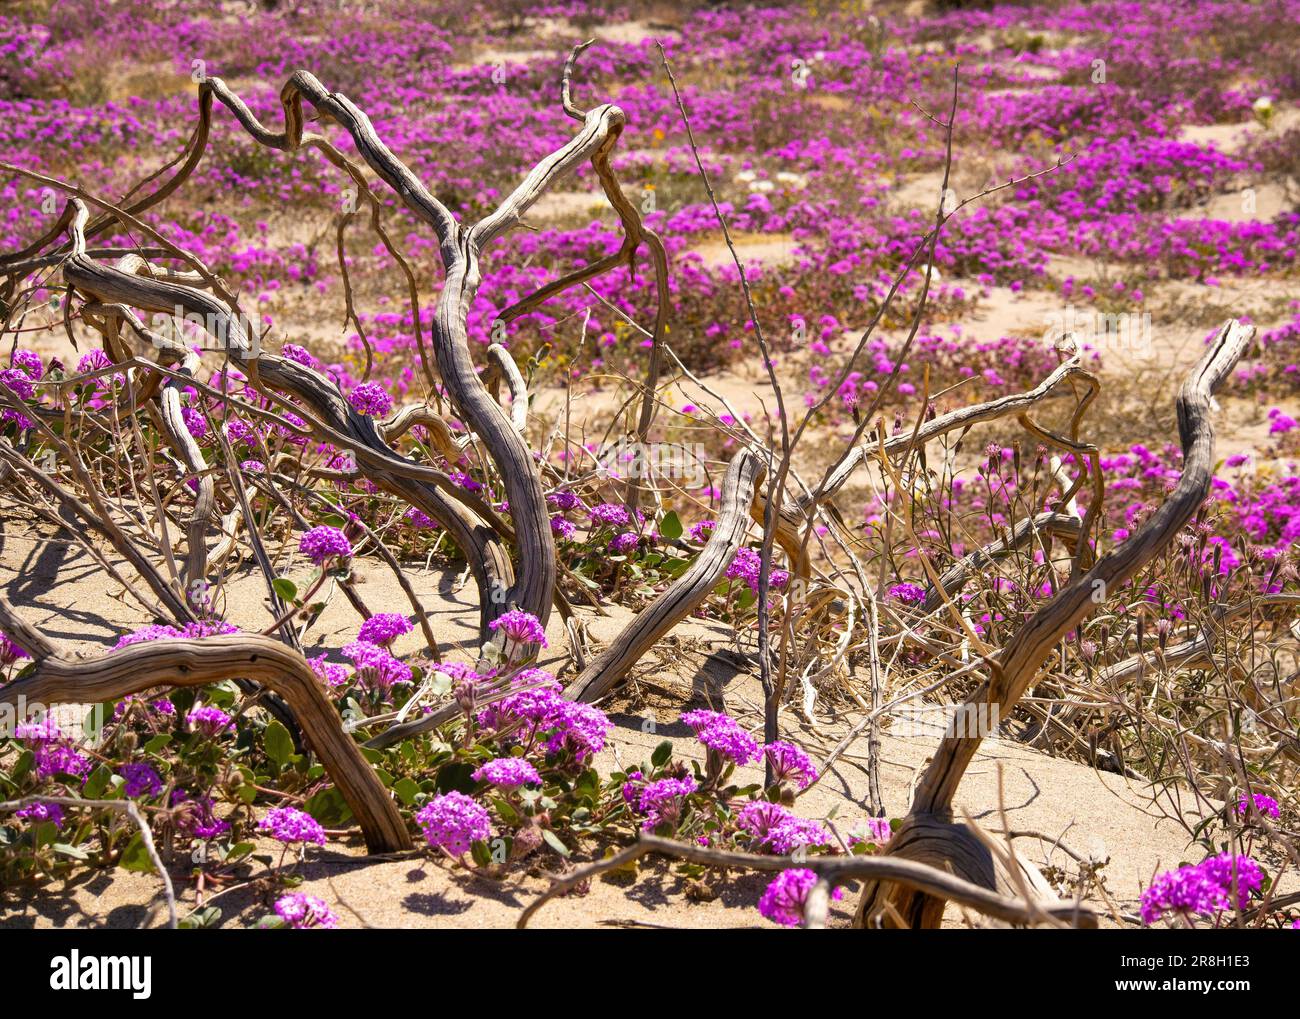 Desert Sand Verbena at Anza Borrego Desert State Park, California Stock Photo